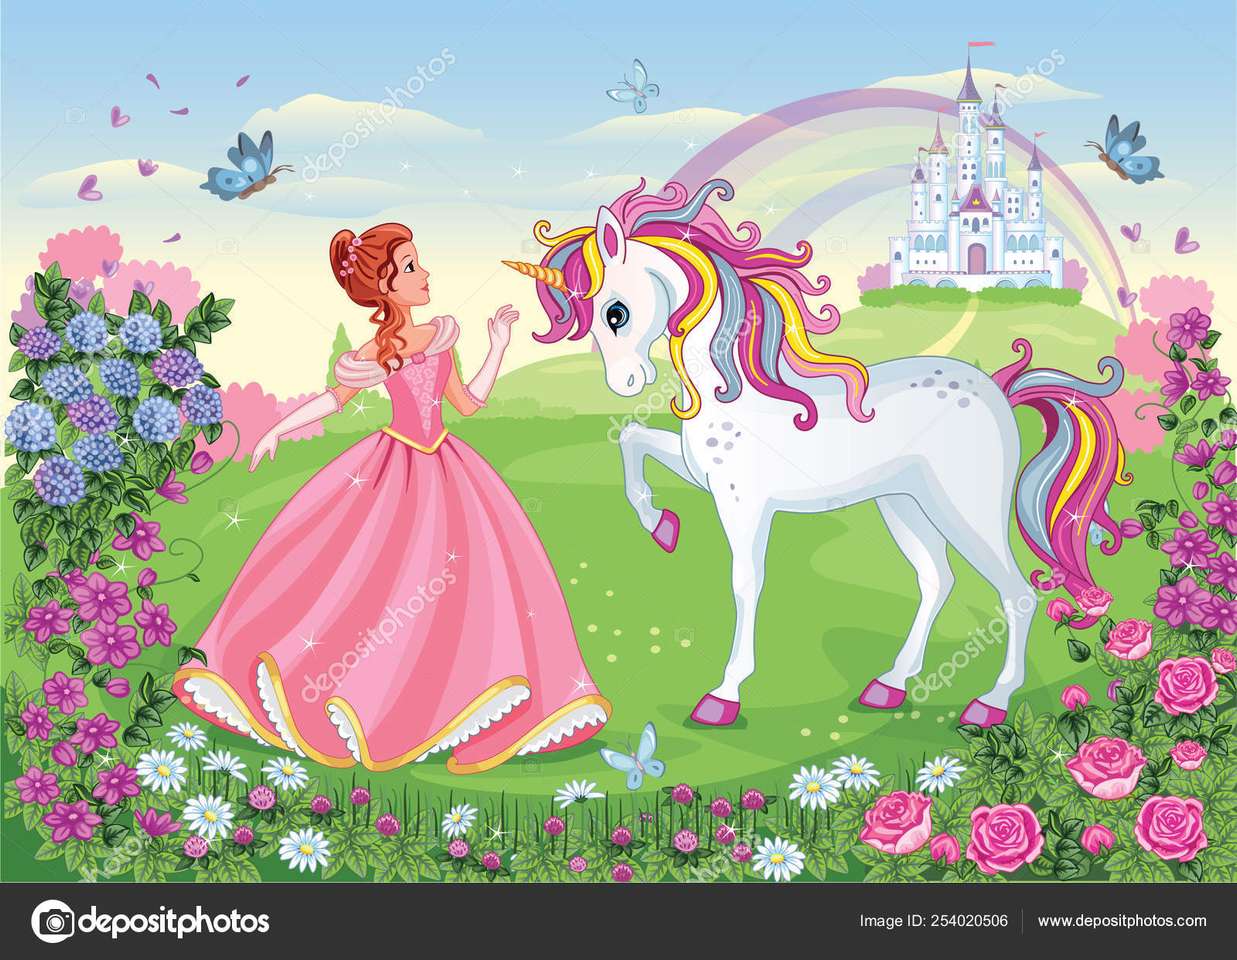 Barbie és a Pegasus varázsa online puzzle